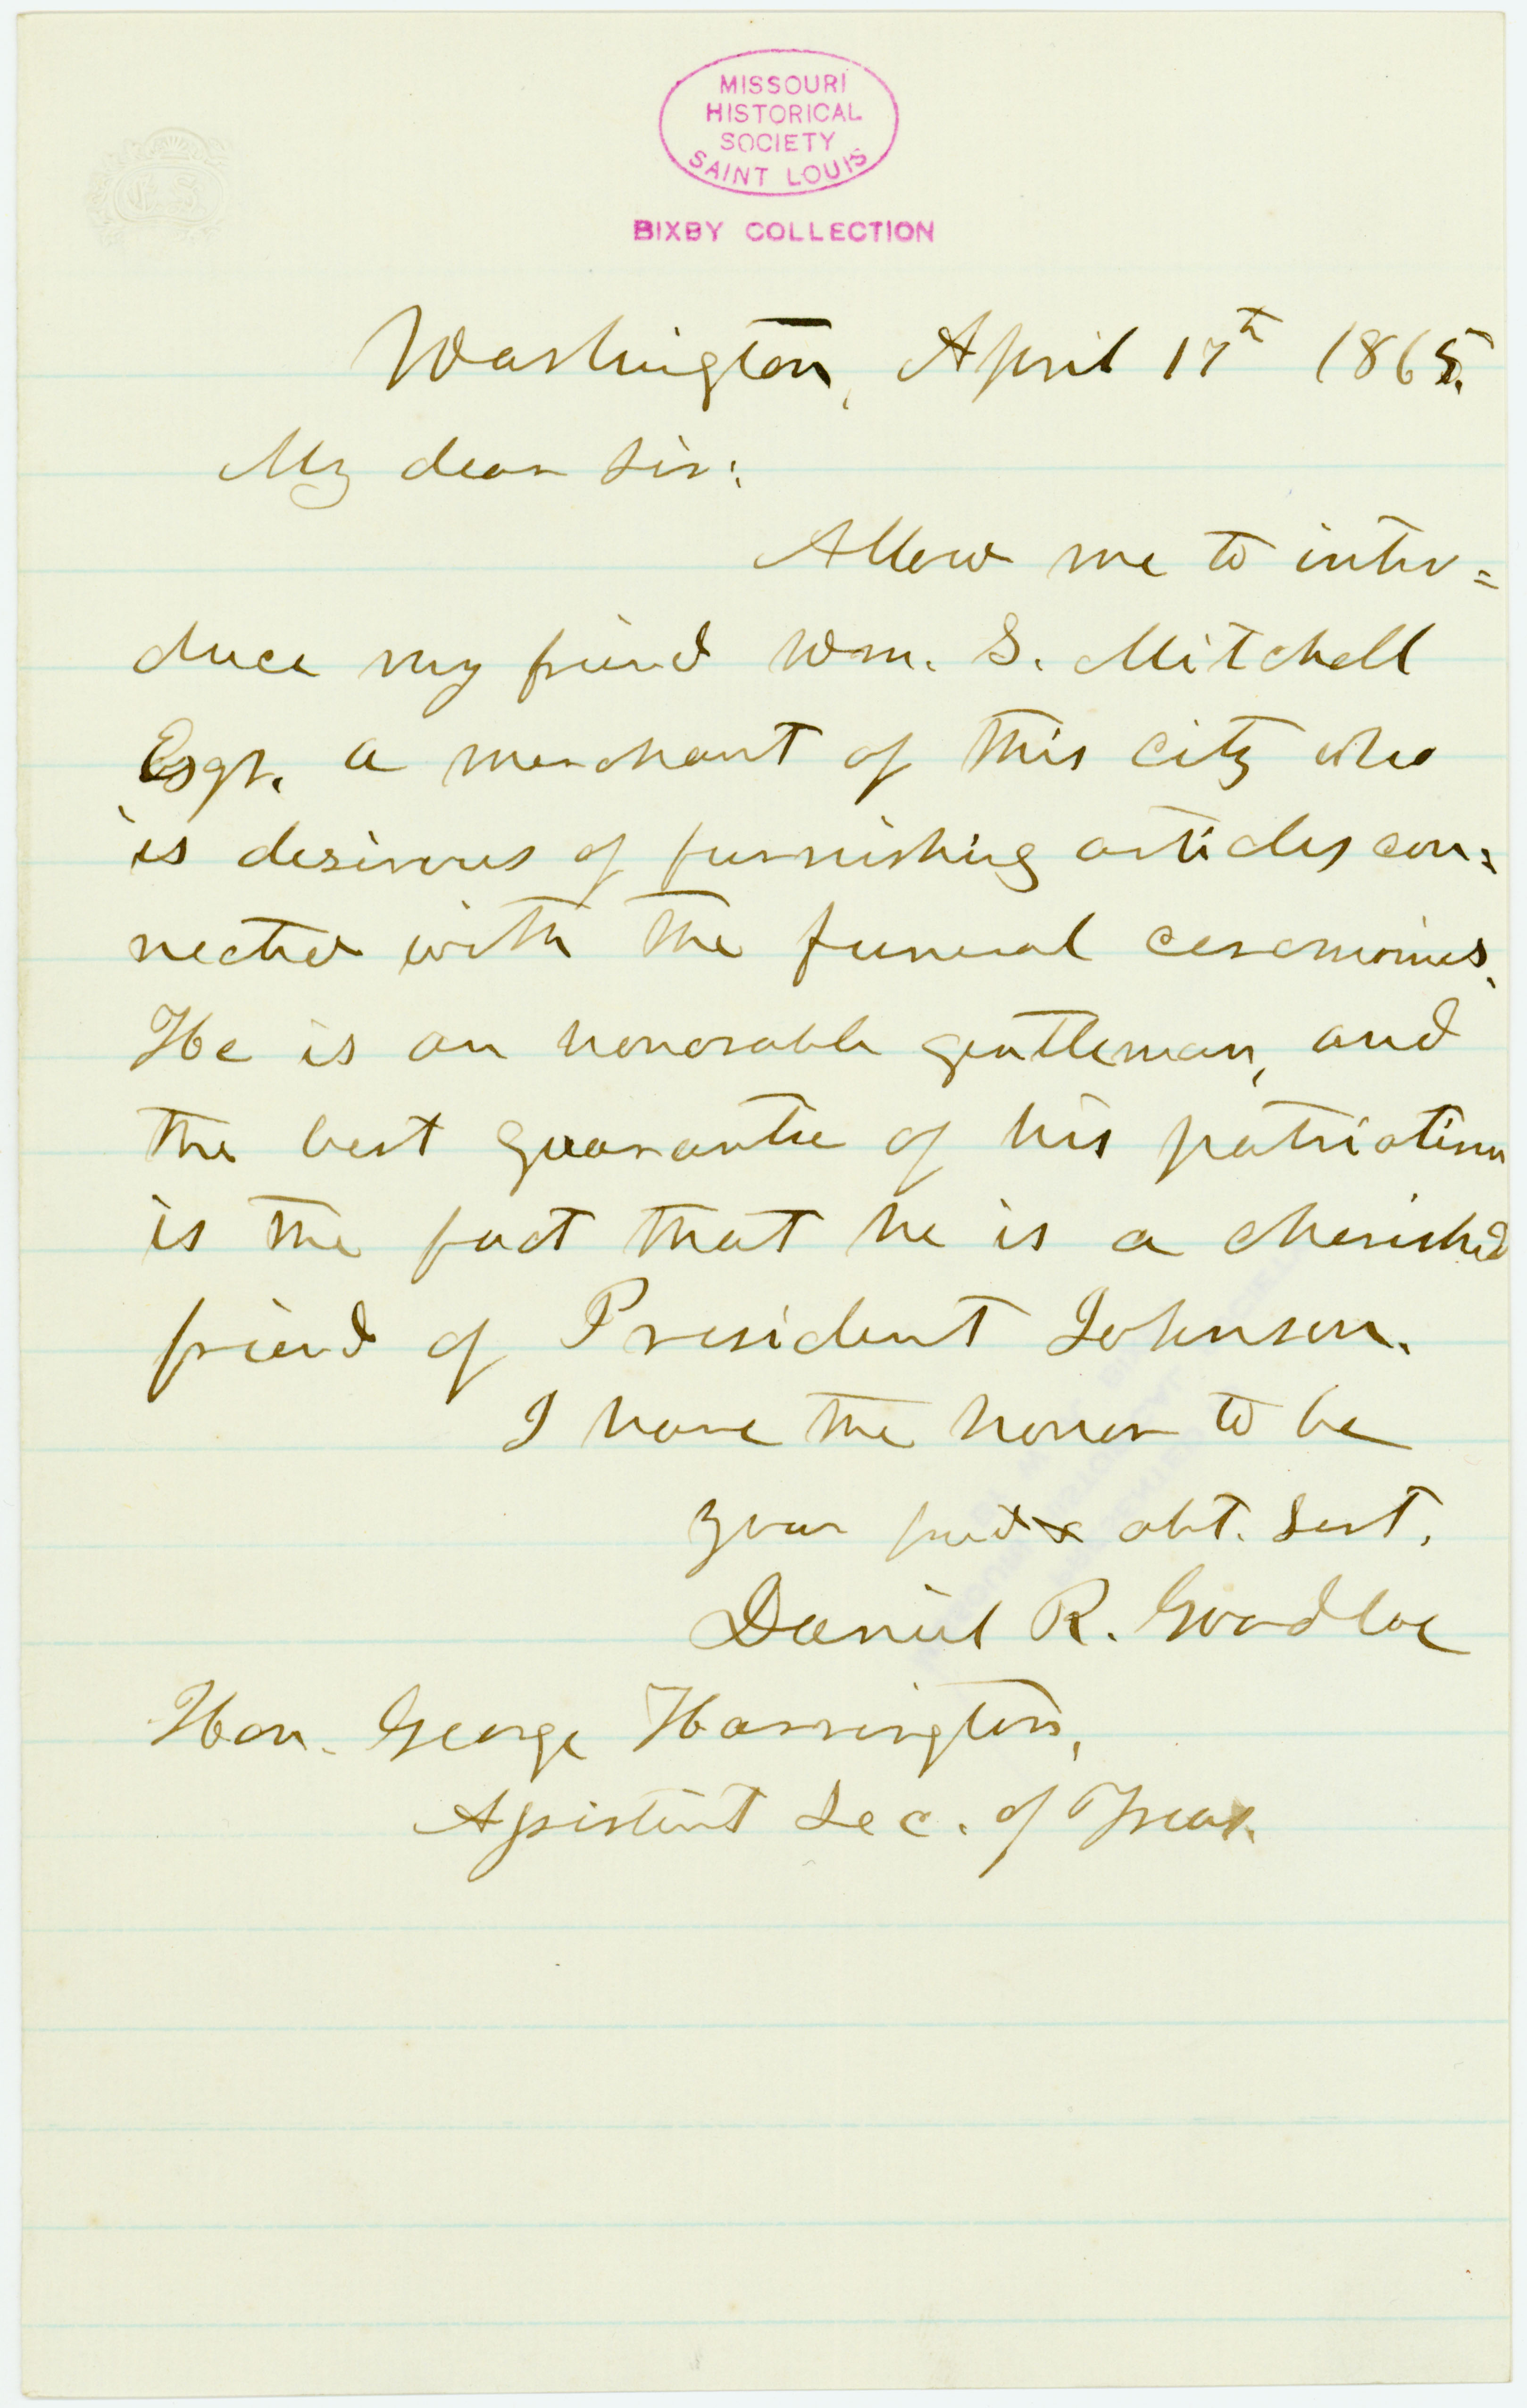 Letter signed Daniel R. Goodloe, Washington, to Hon. George Harrington, Assistant Sec. of Treas., April 17, 1865